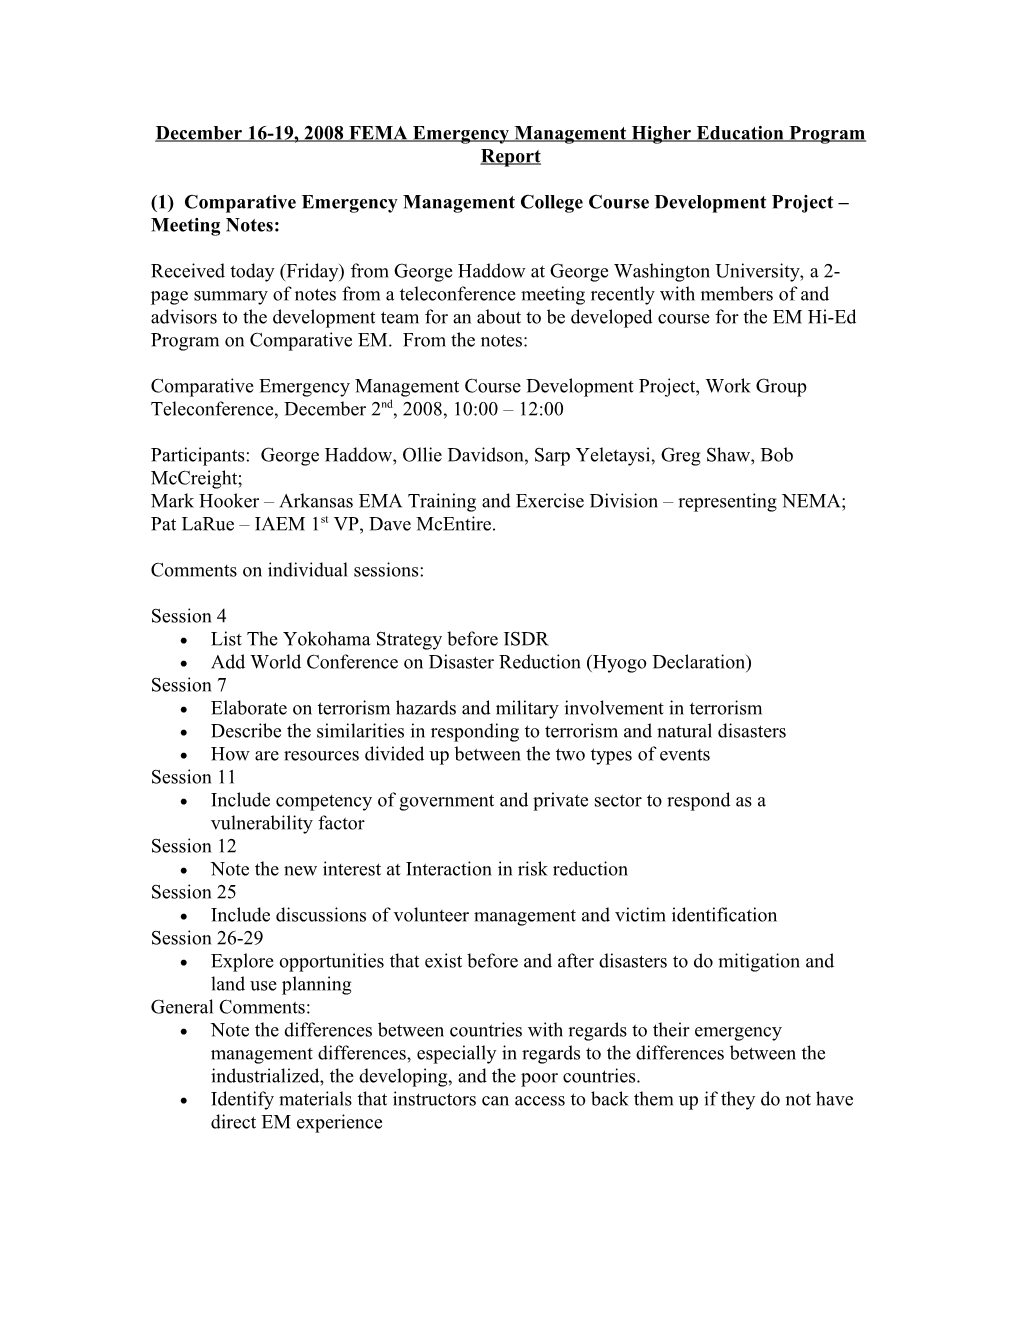 December 16-19, 2008 FEMA Emergency Management Higher Education Program Report